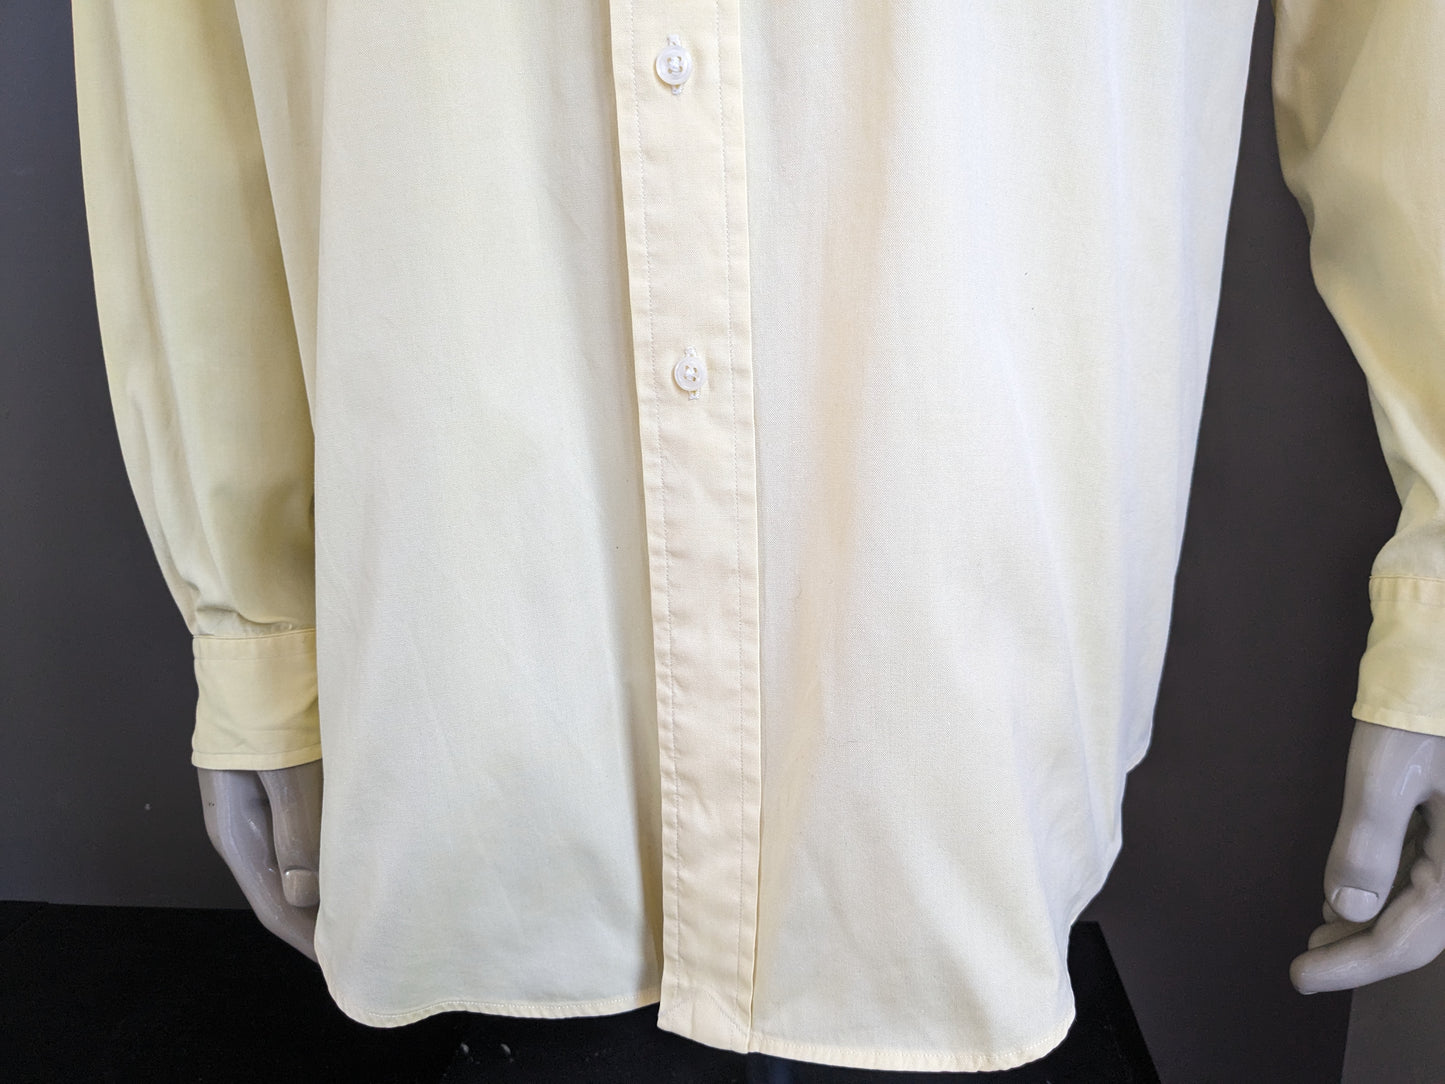 Polo by Ralph Lauren shirt. Yellow. Yarmouth type. Size 2XL / XXL.